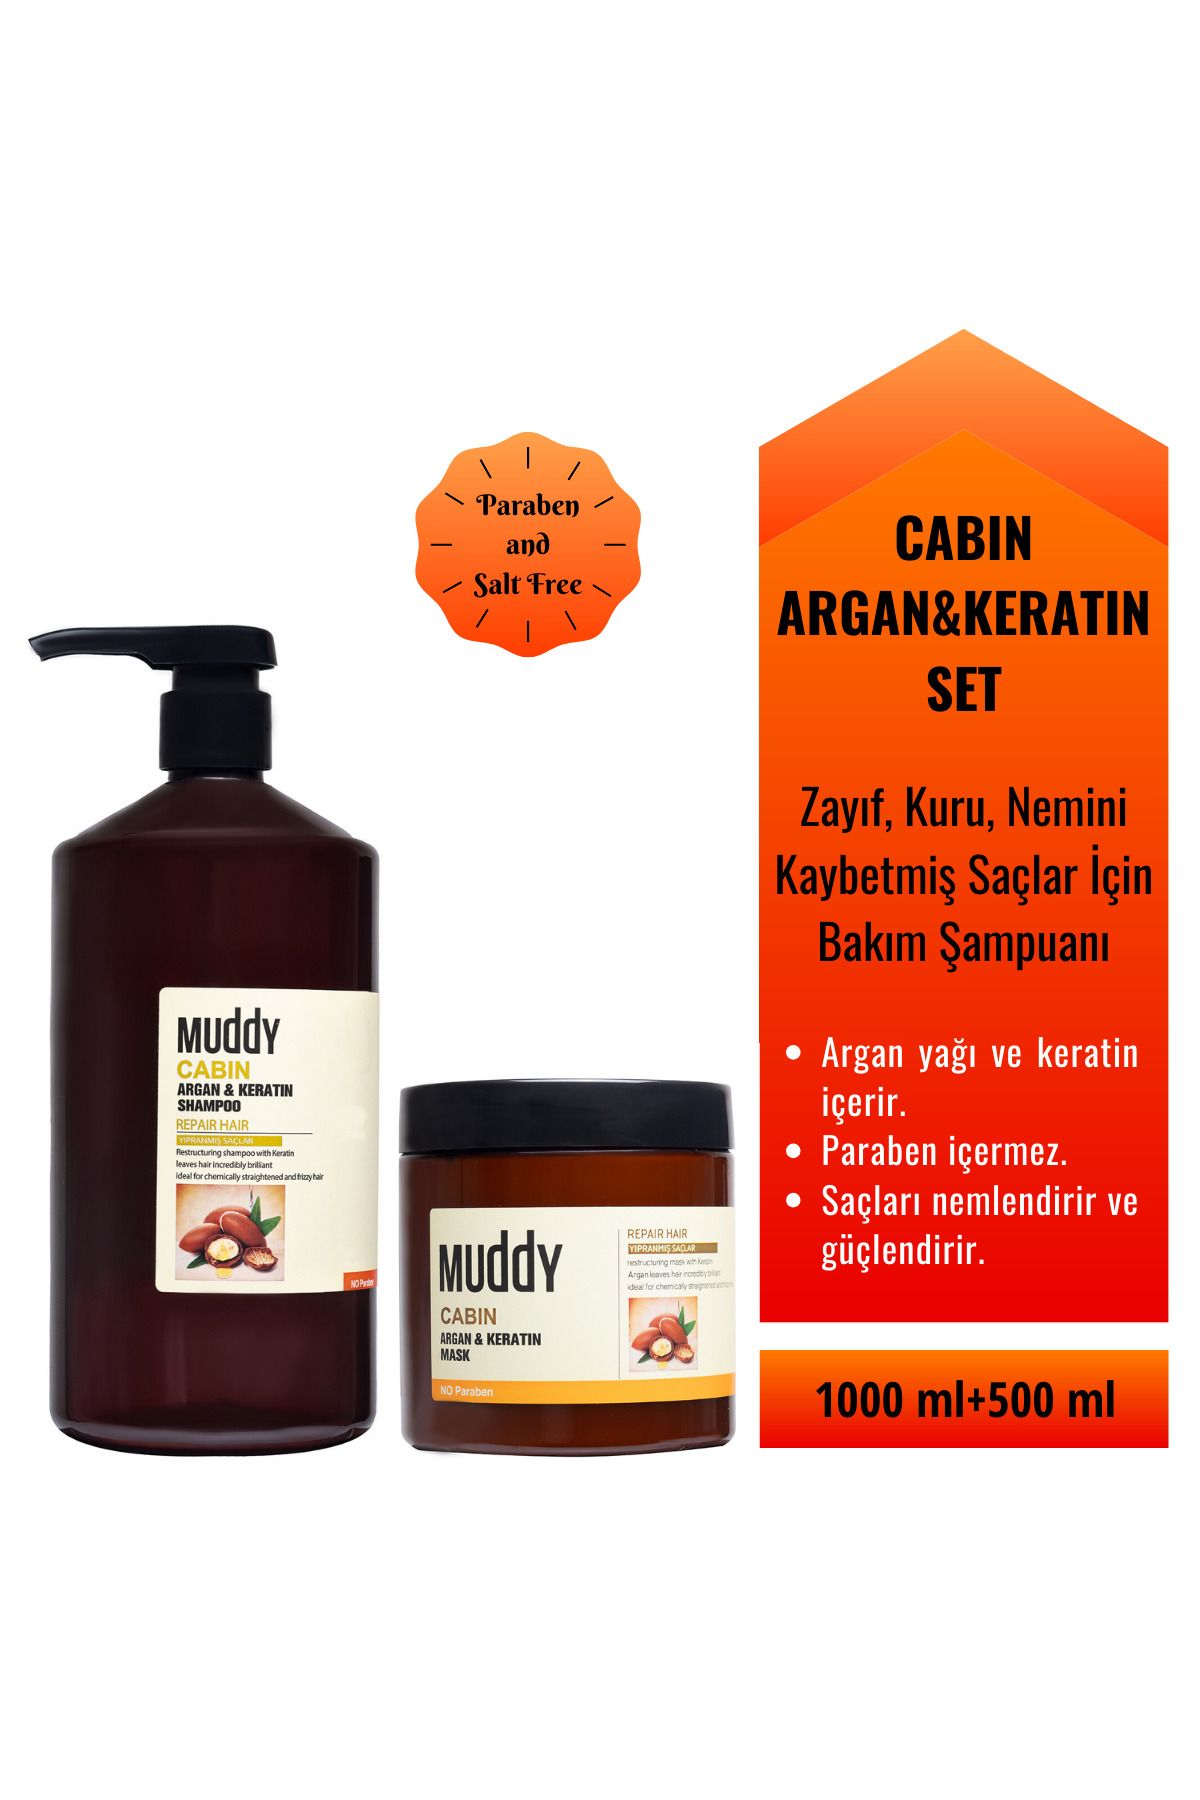 Muddy Cabin Argan & Keratin Shampoo 1000 ml Cabin Argan Ve Keratin Mask 500 ml